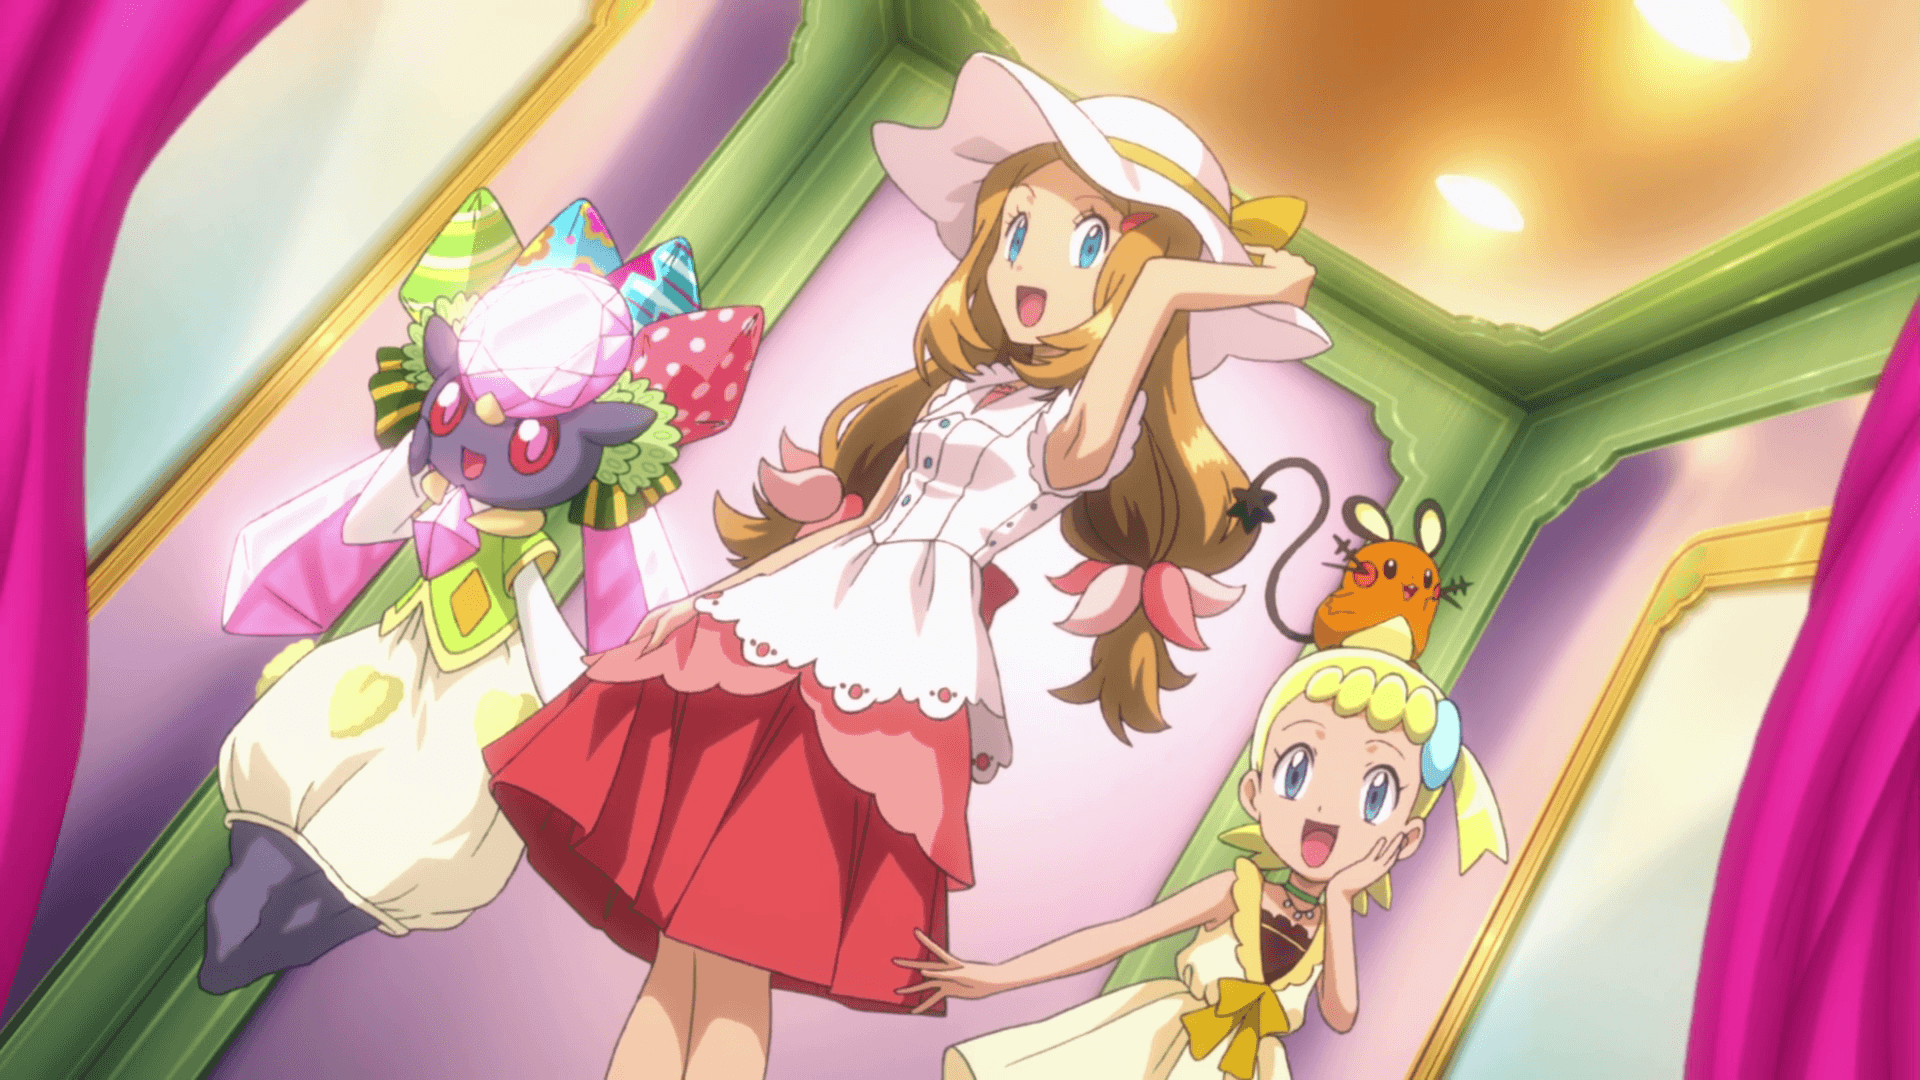 Cute Pokemon Serena Wallpapers